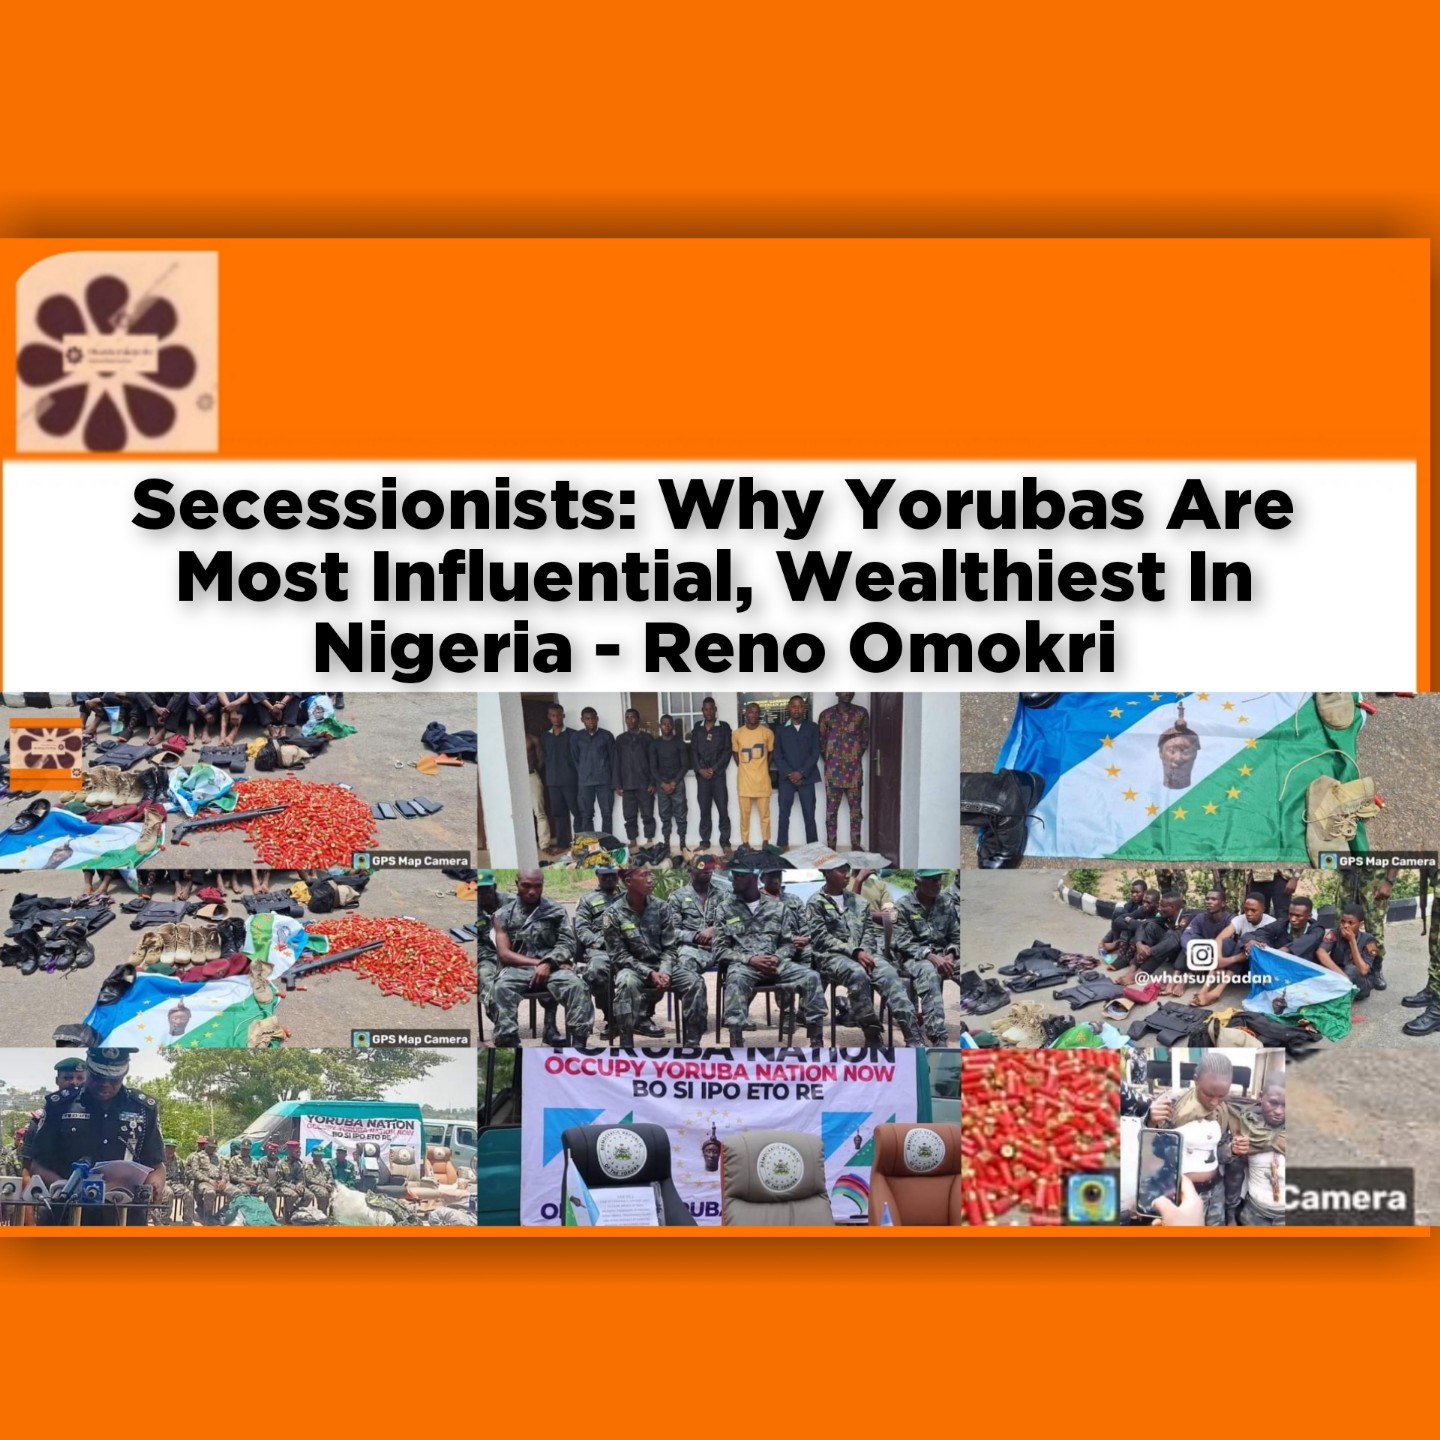 Secessionists: Why Yorubas Are Most Influential, Wealthiest In Nigeria - Reno Omokri ~ OsazuwaAkonedo #Atiku